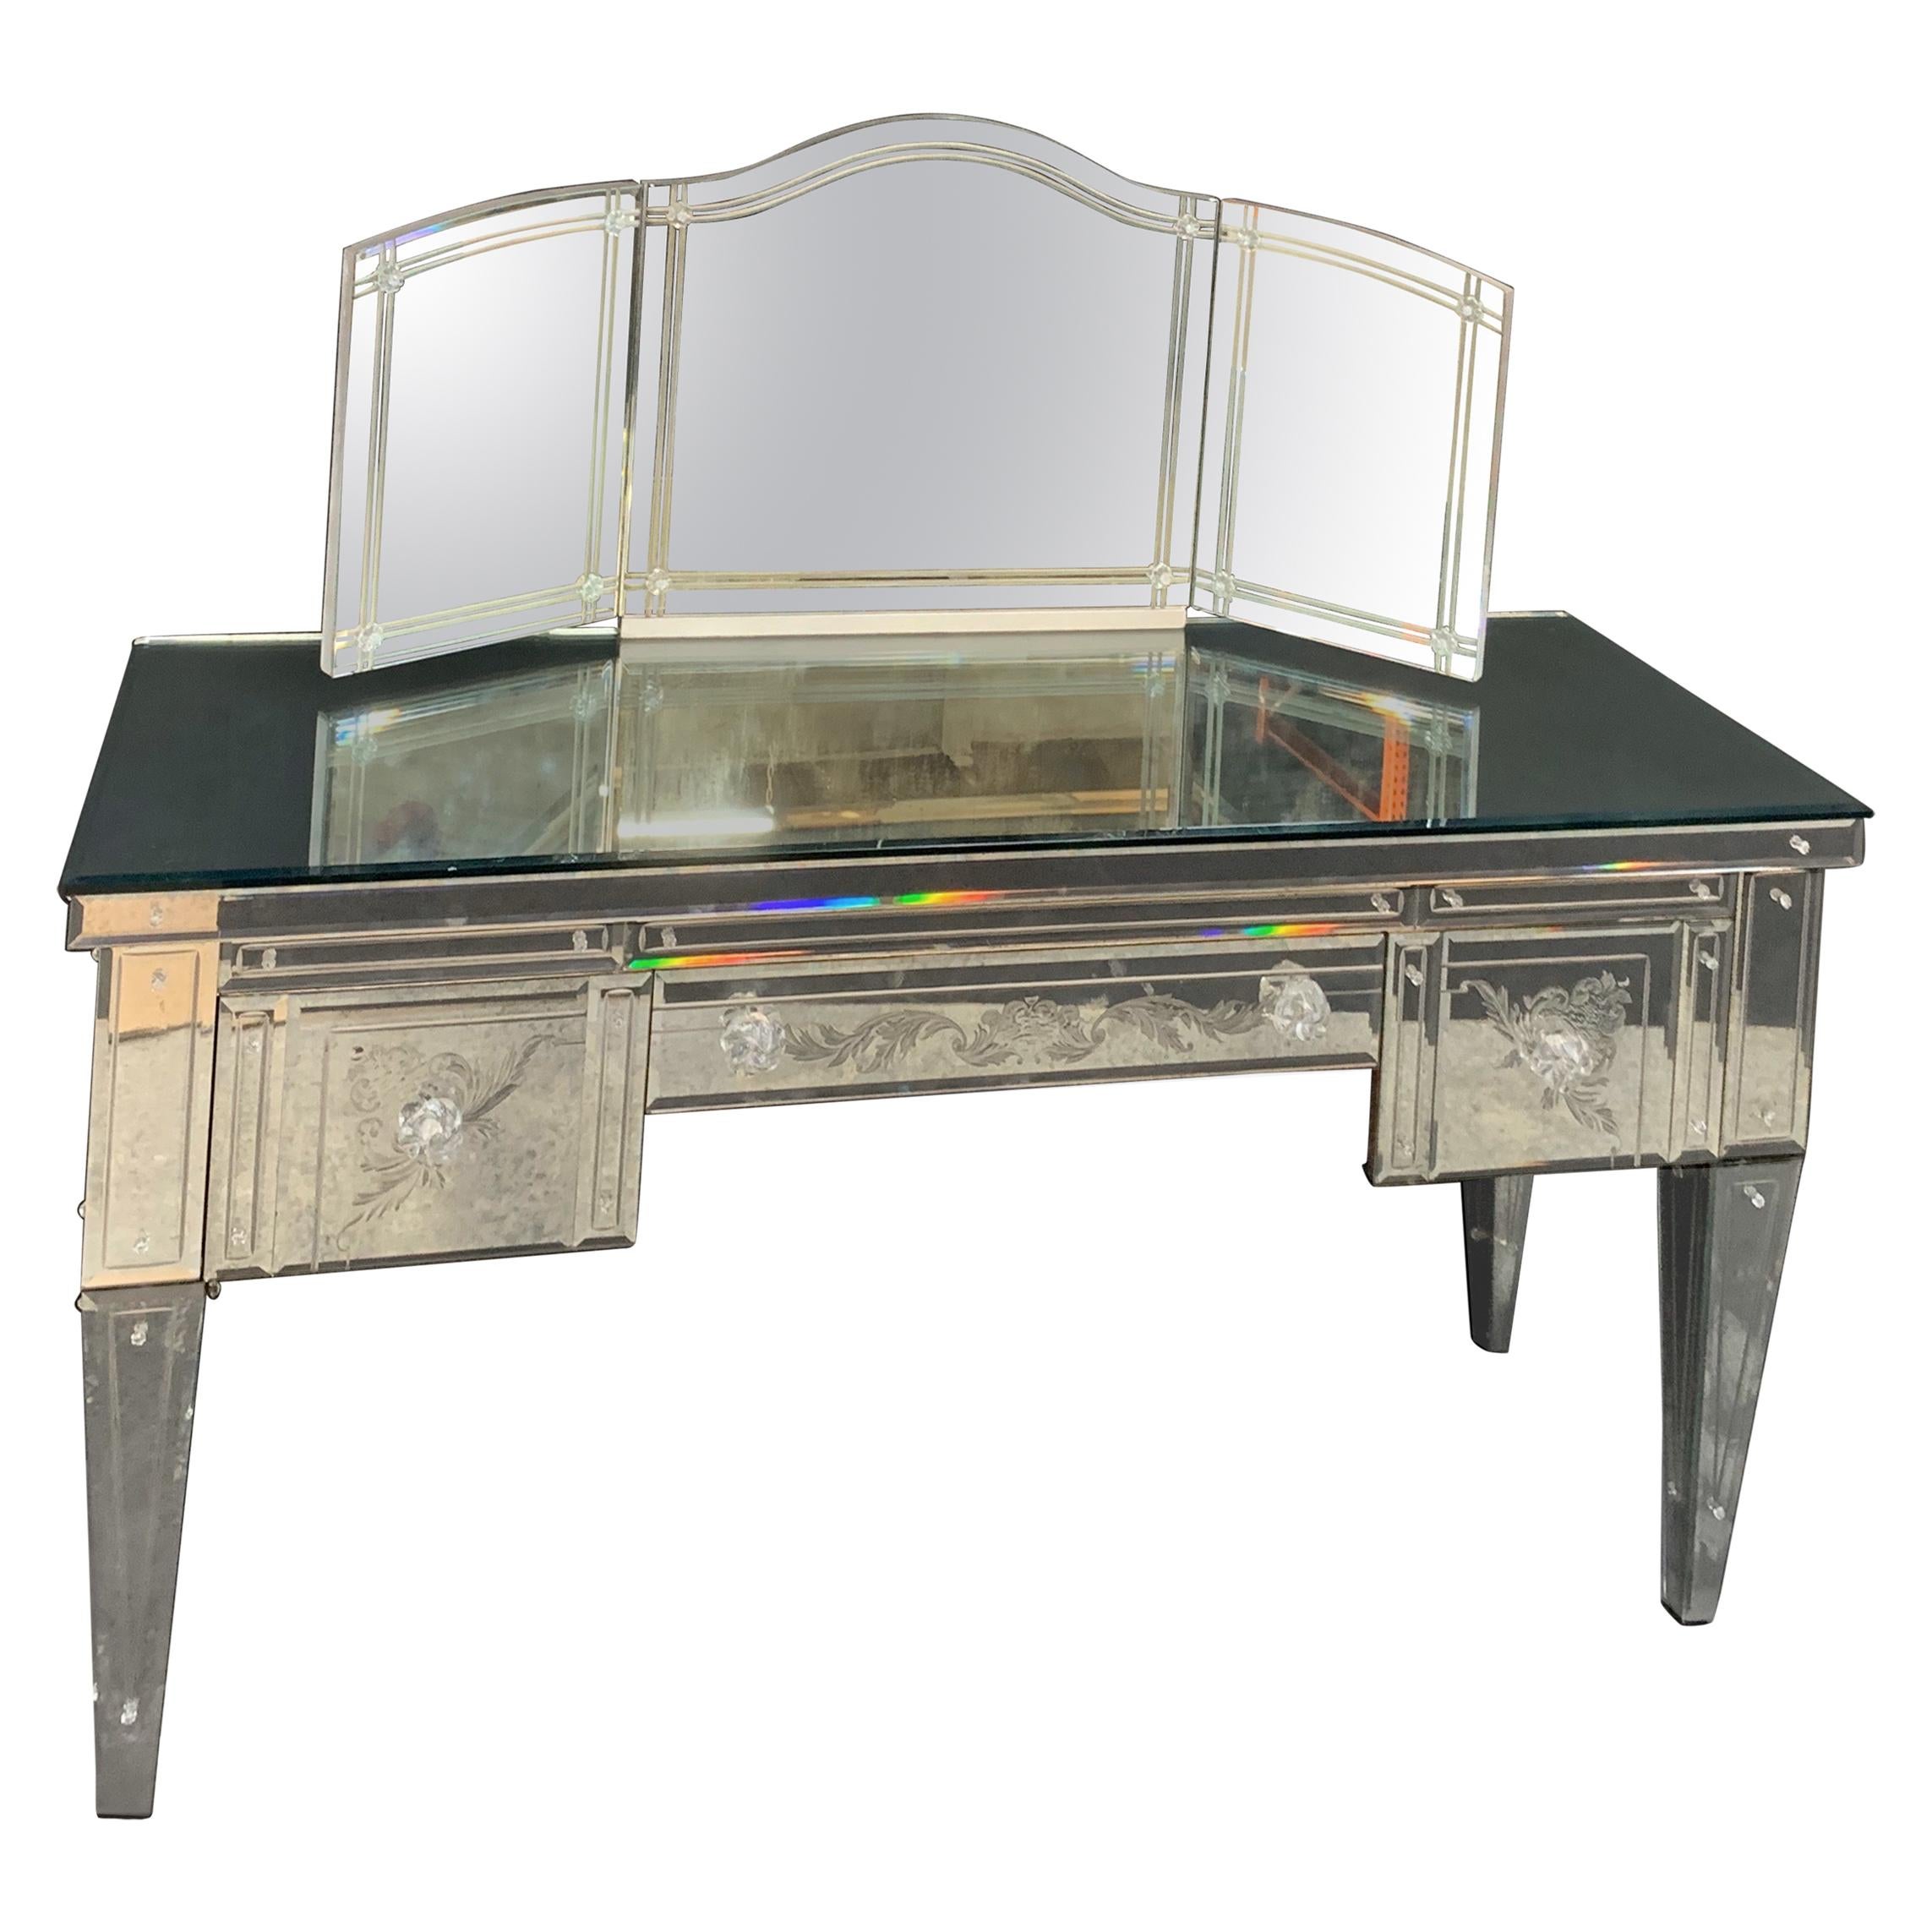 Wonderful Vintage Venetian Antique Etched Mirrored Trifold Mirror Vanity Desk